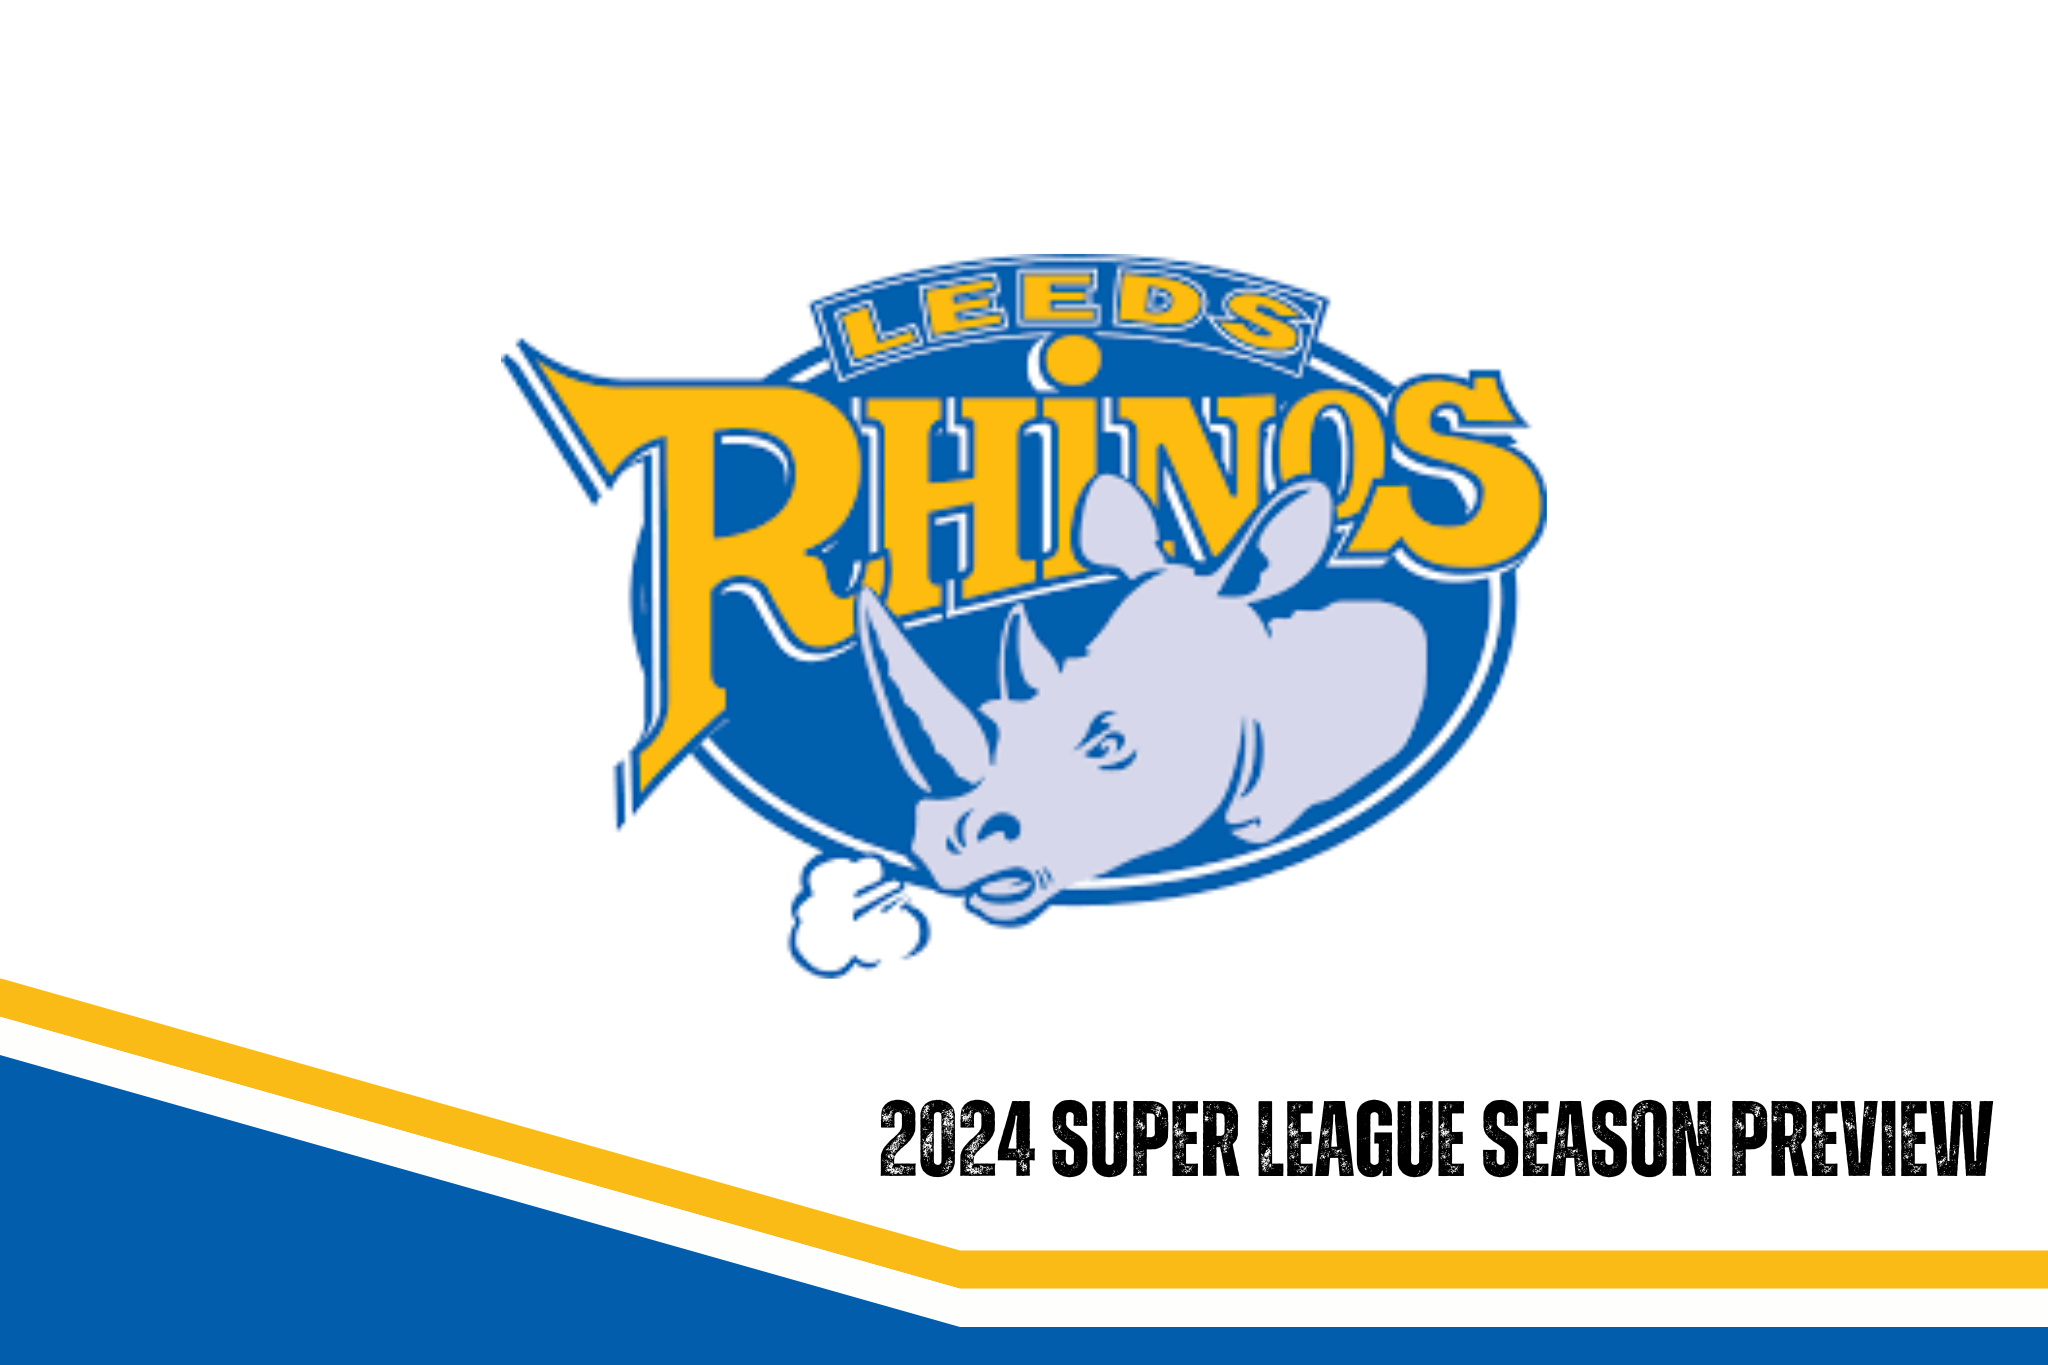 Leeds Rhinos 2024 season preview